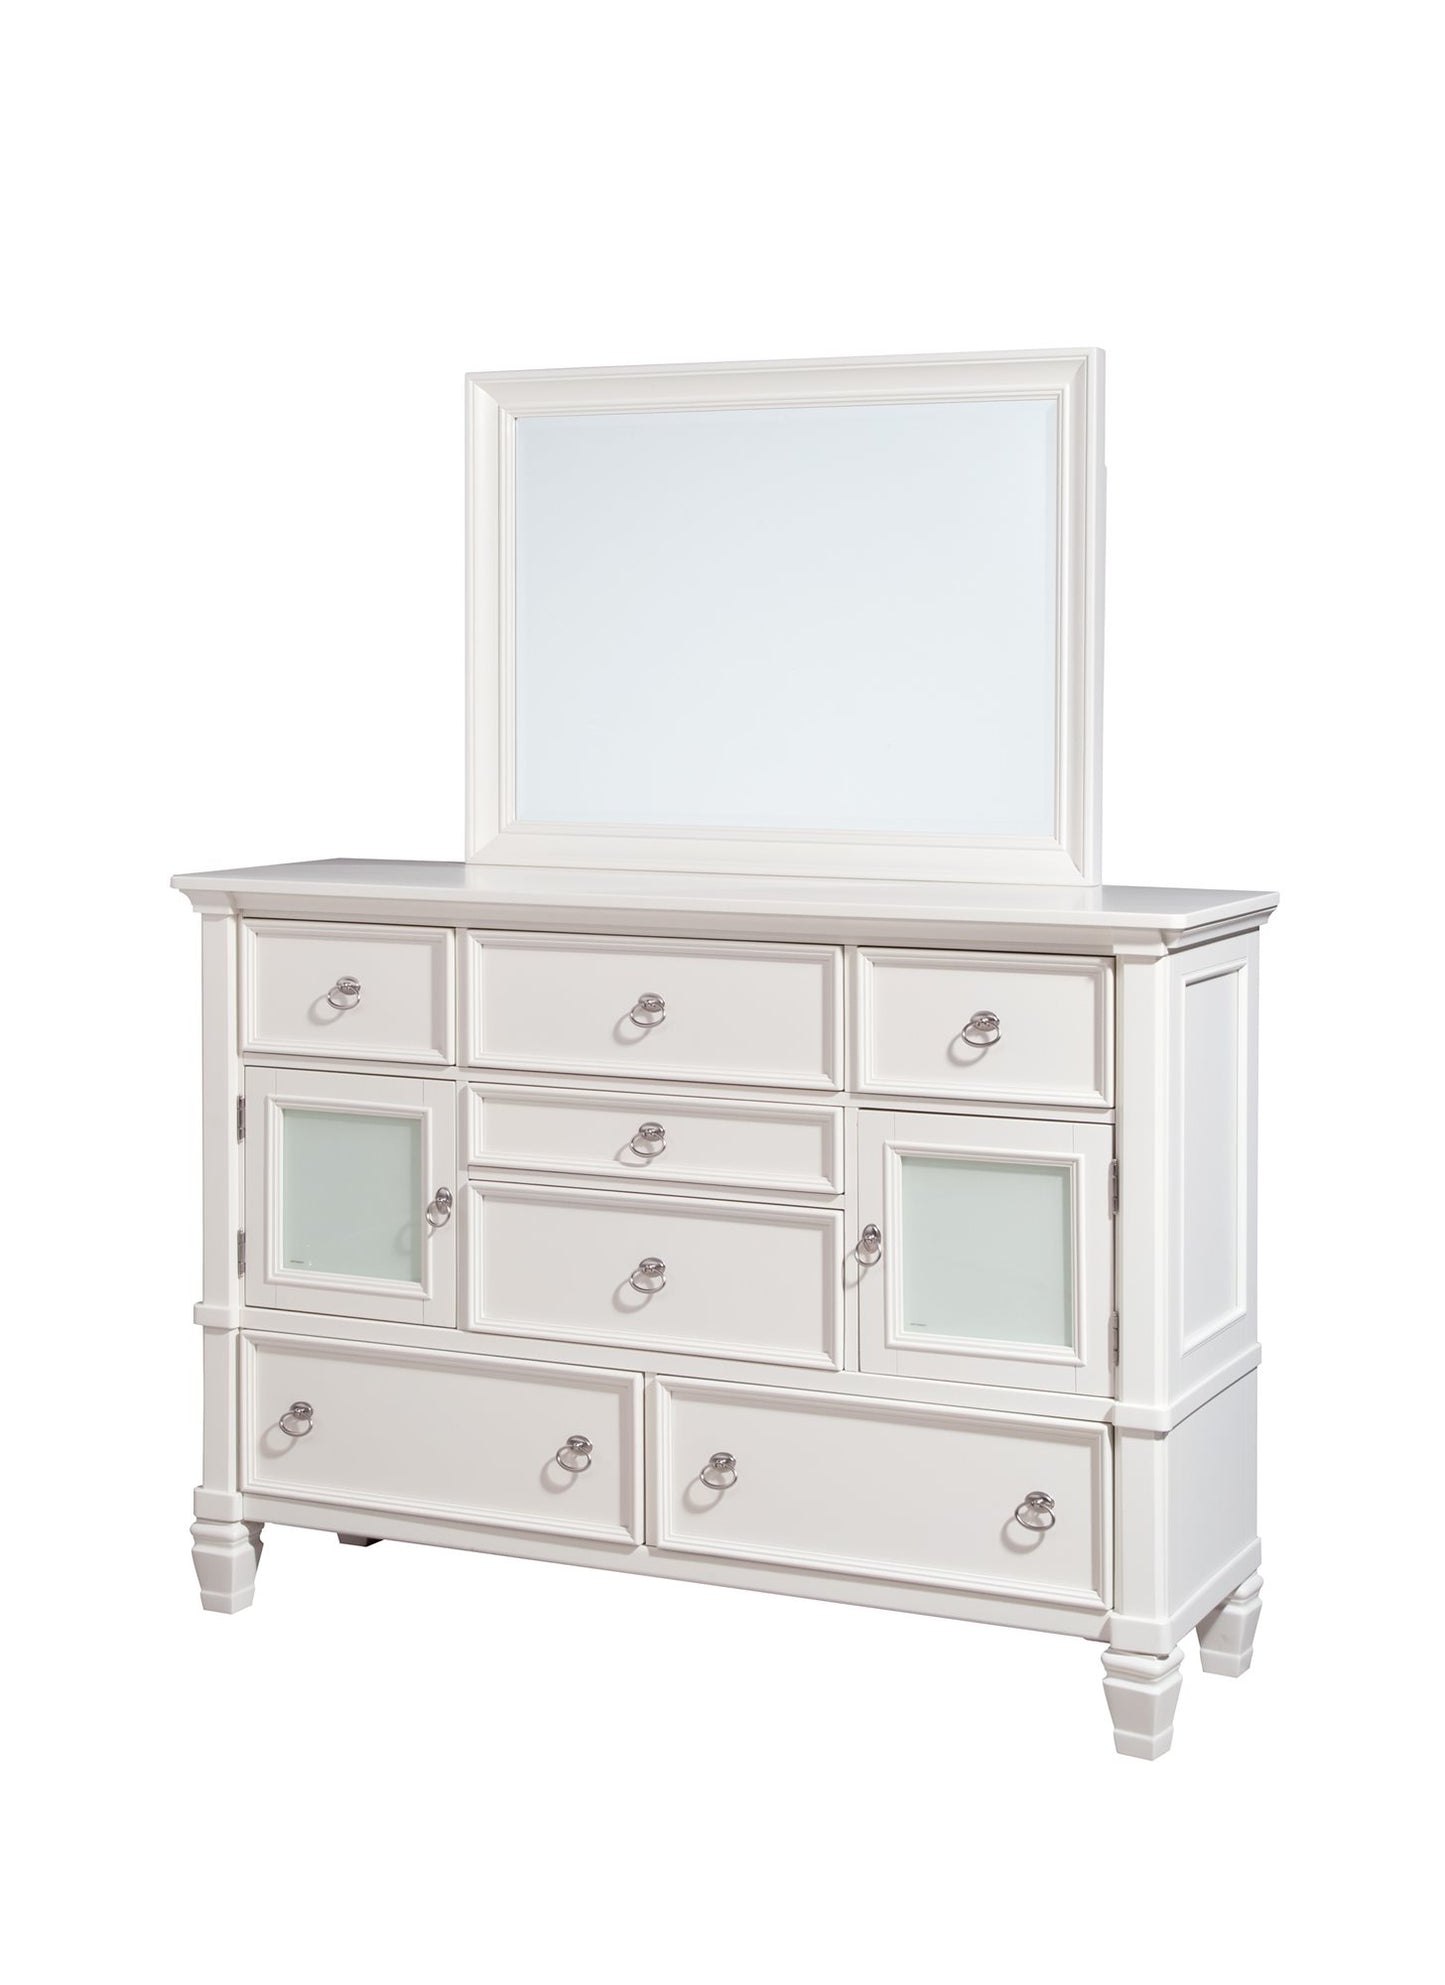 Ashley Prentice 5PC Bedroom Set Queen Sleigh Bed Dresser Mirror One Nightstand Chest in White